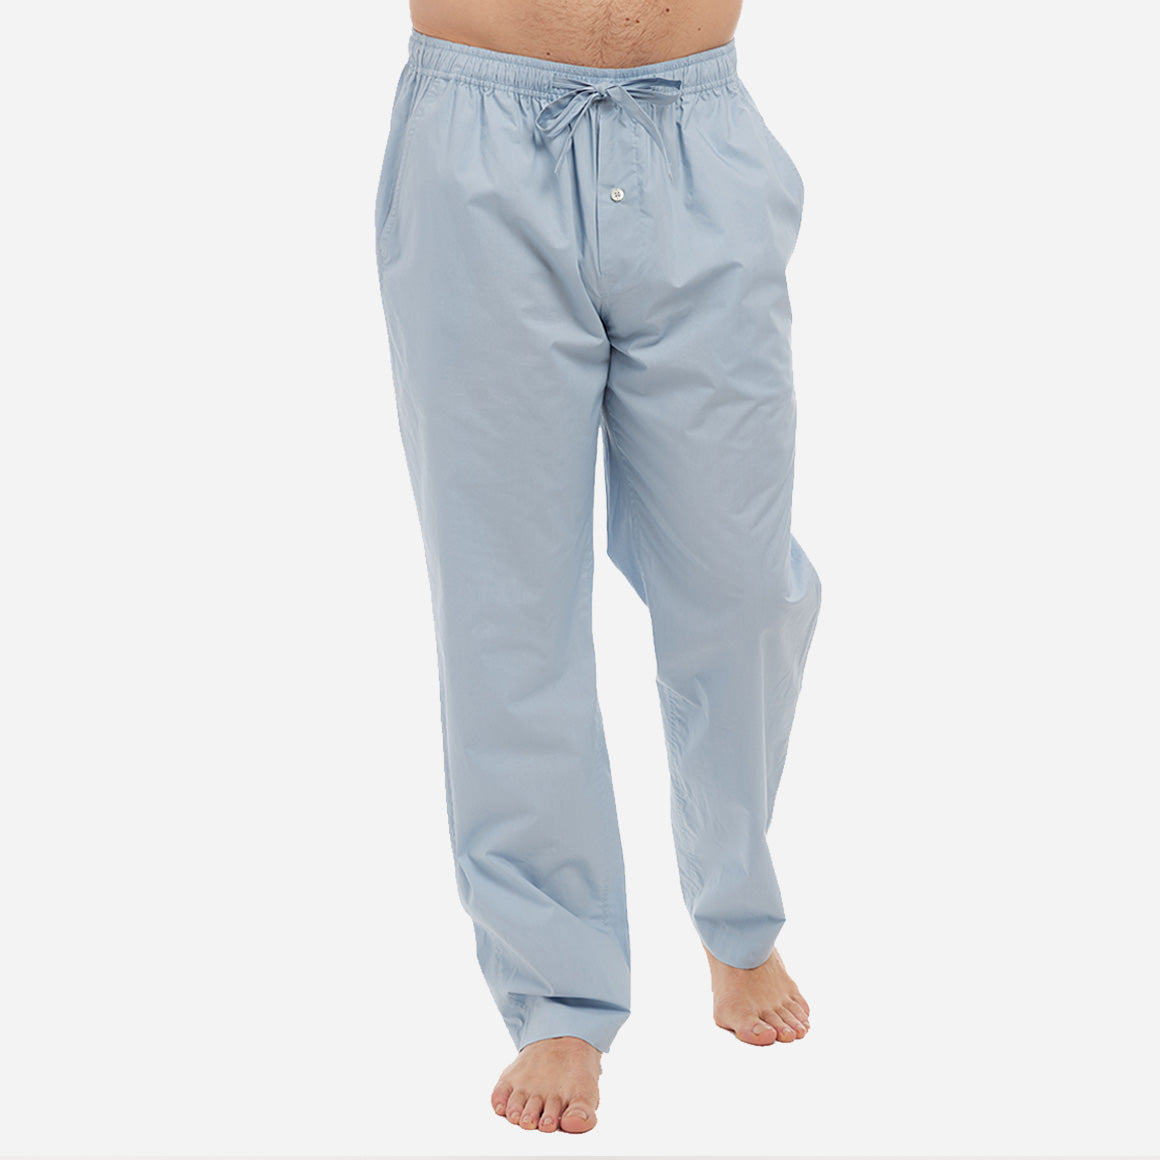 Womens Sleepwear Long Pajama Pant with Side Seam Pockets